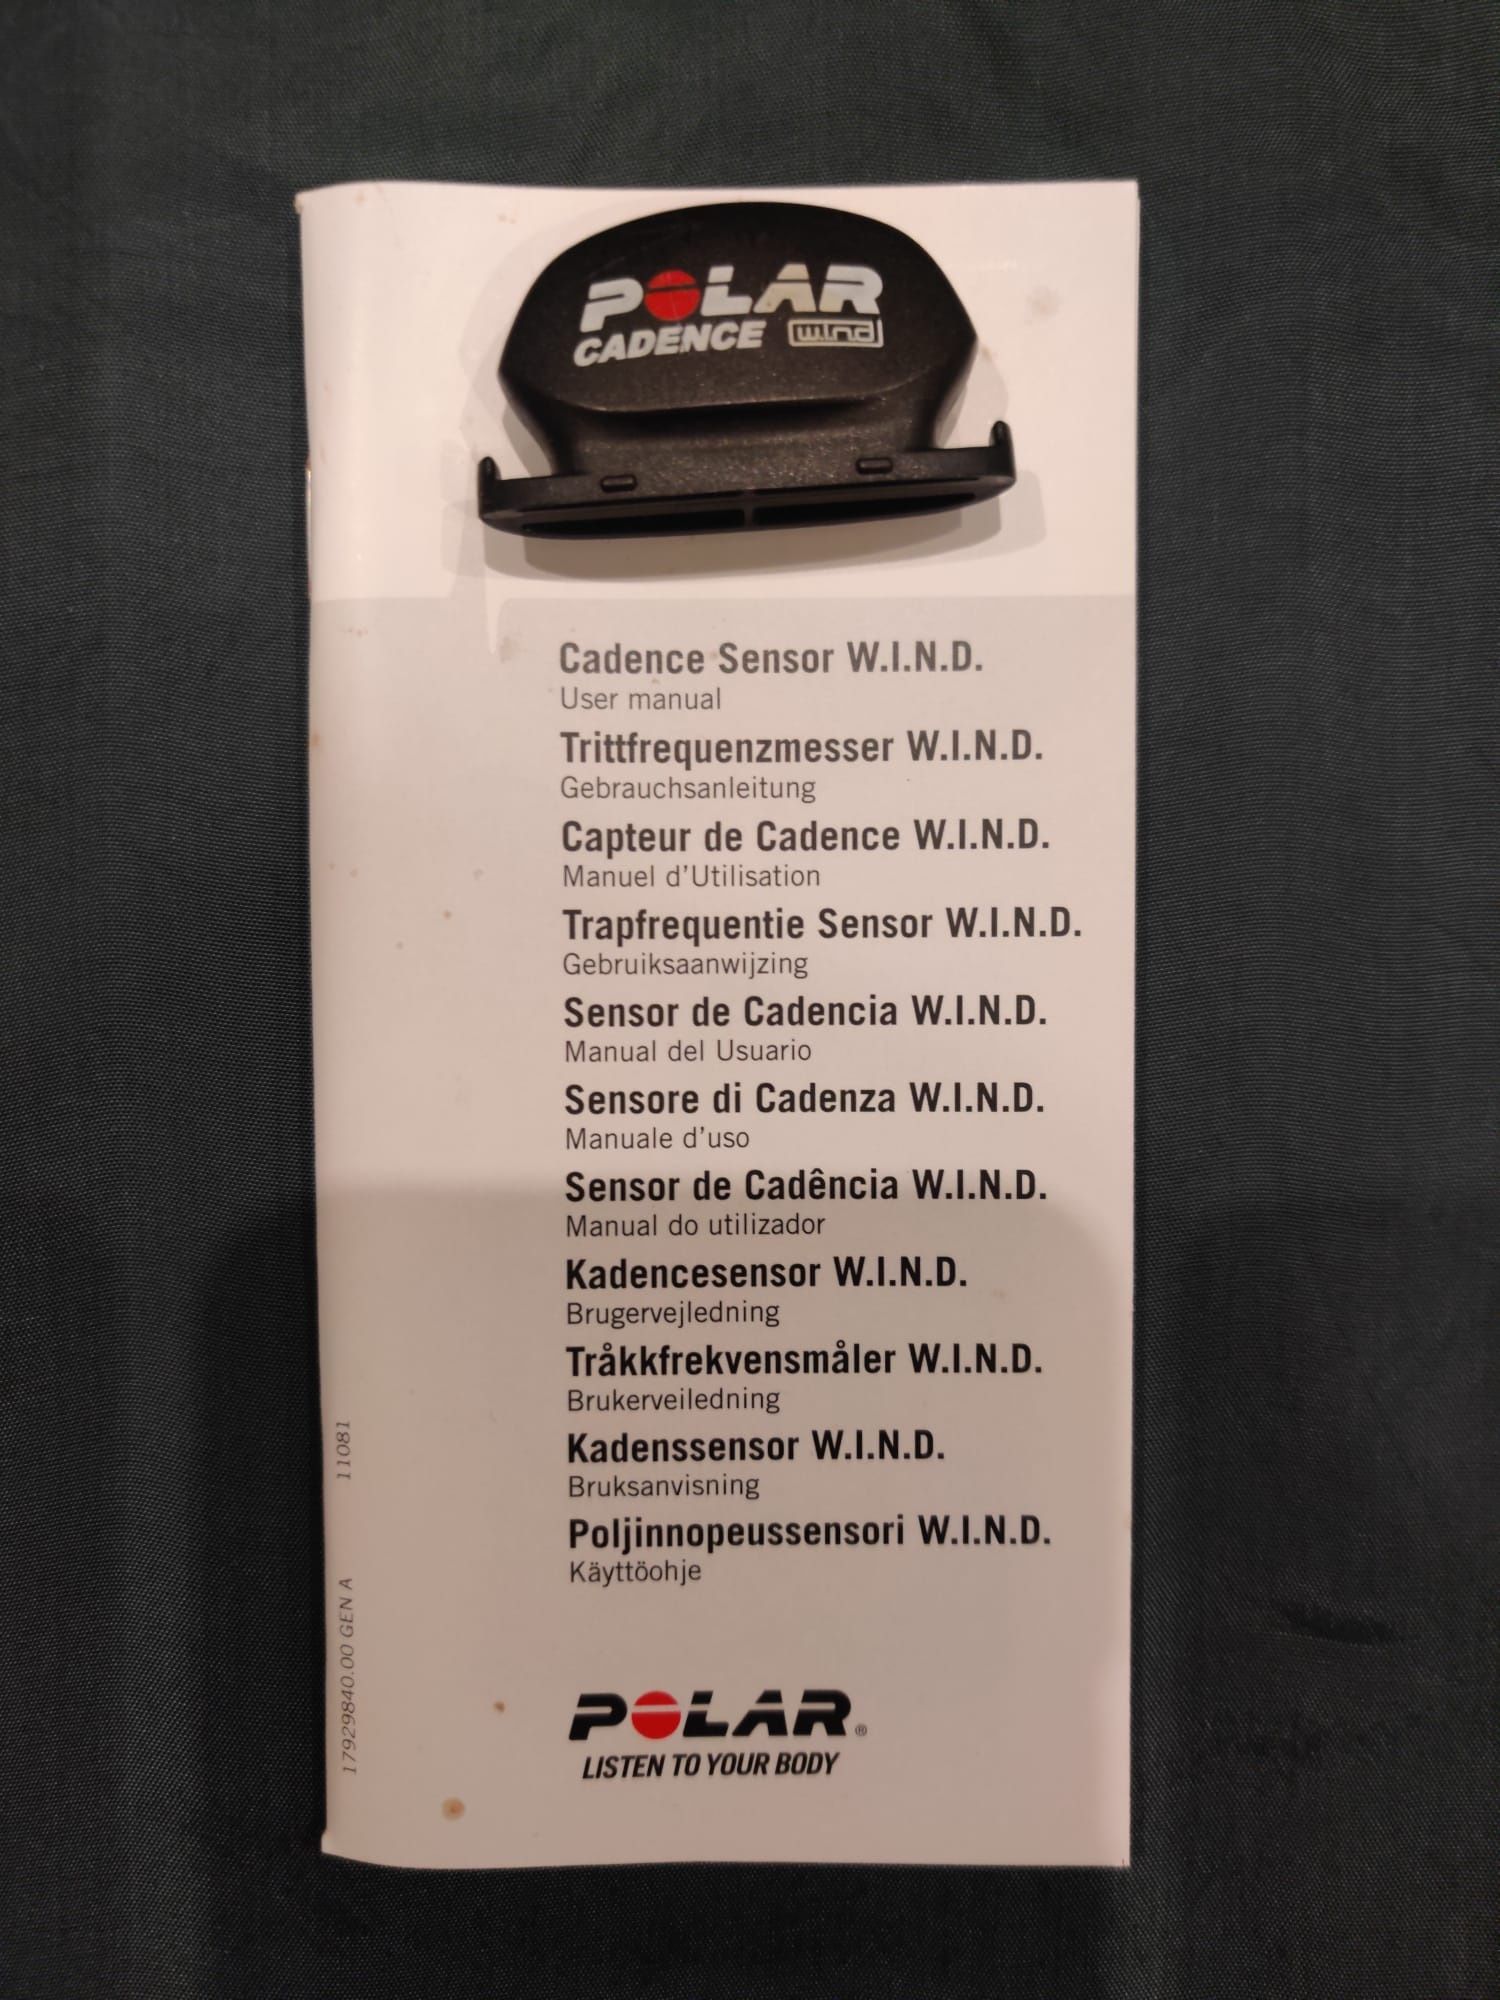 Polar RS 800CX -  Pro Team Edition